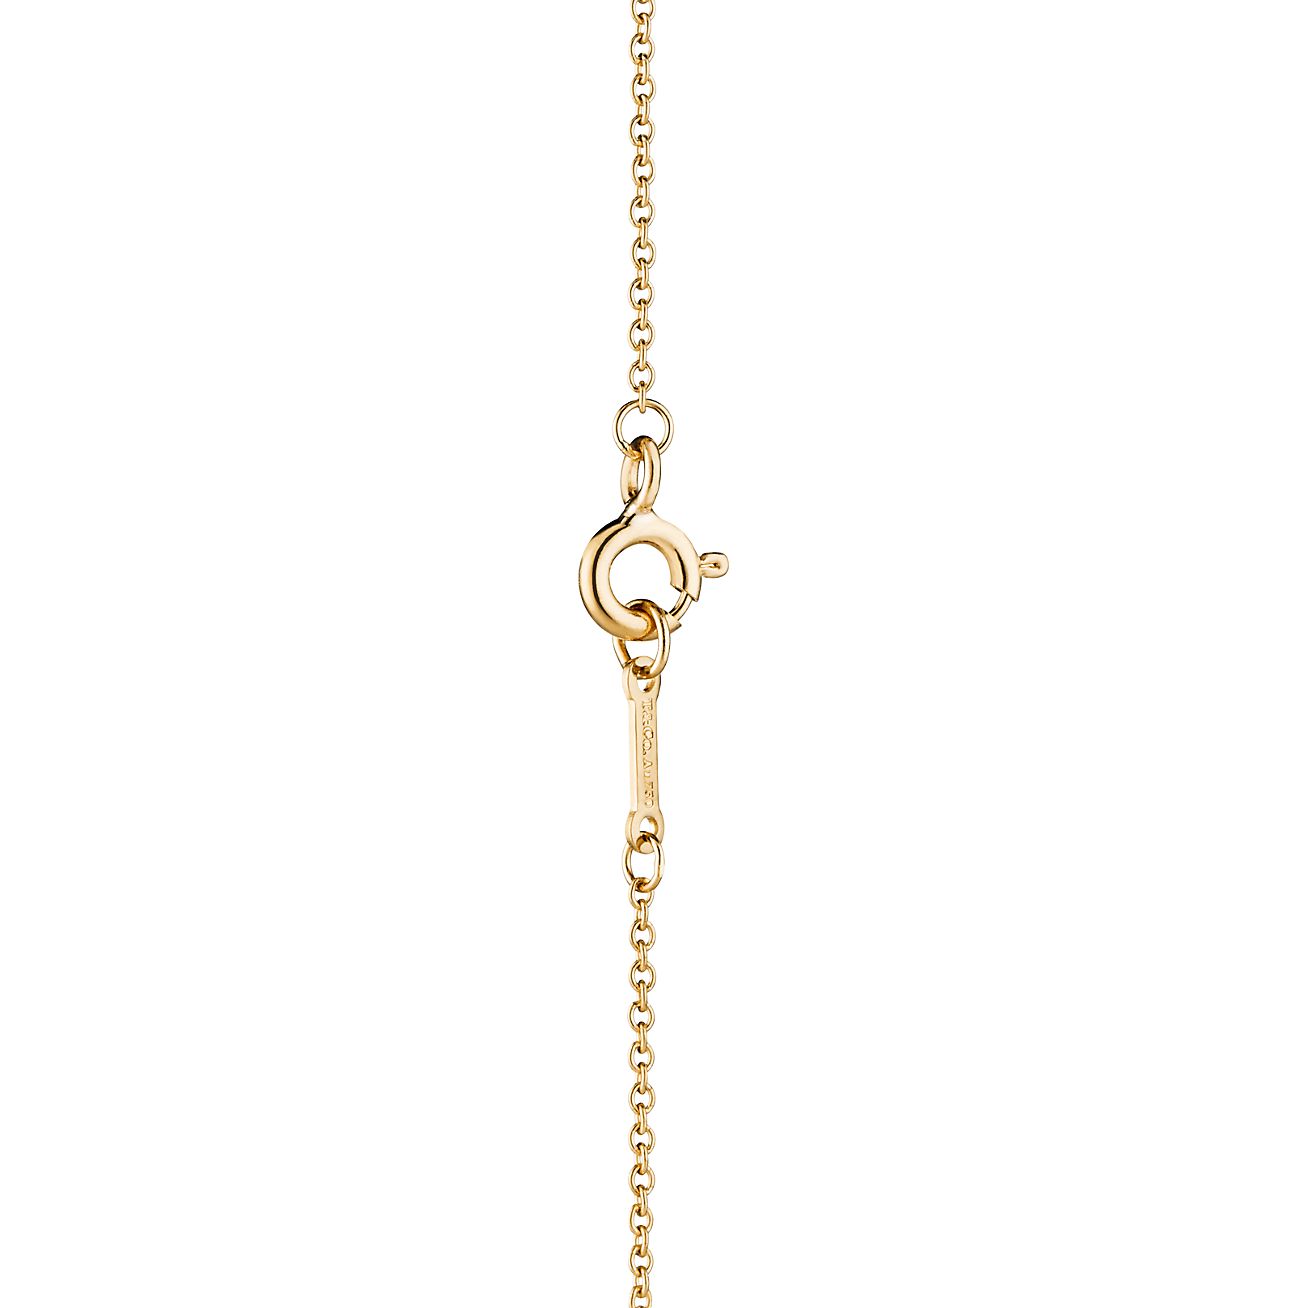 Tiffany & Co. Kiss X Necklace 18k Yellow Gold | eBay